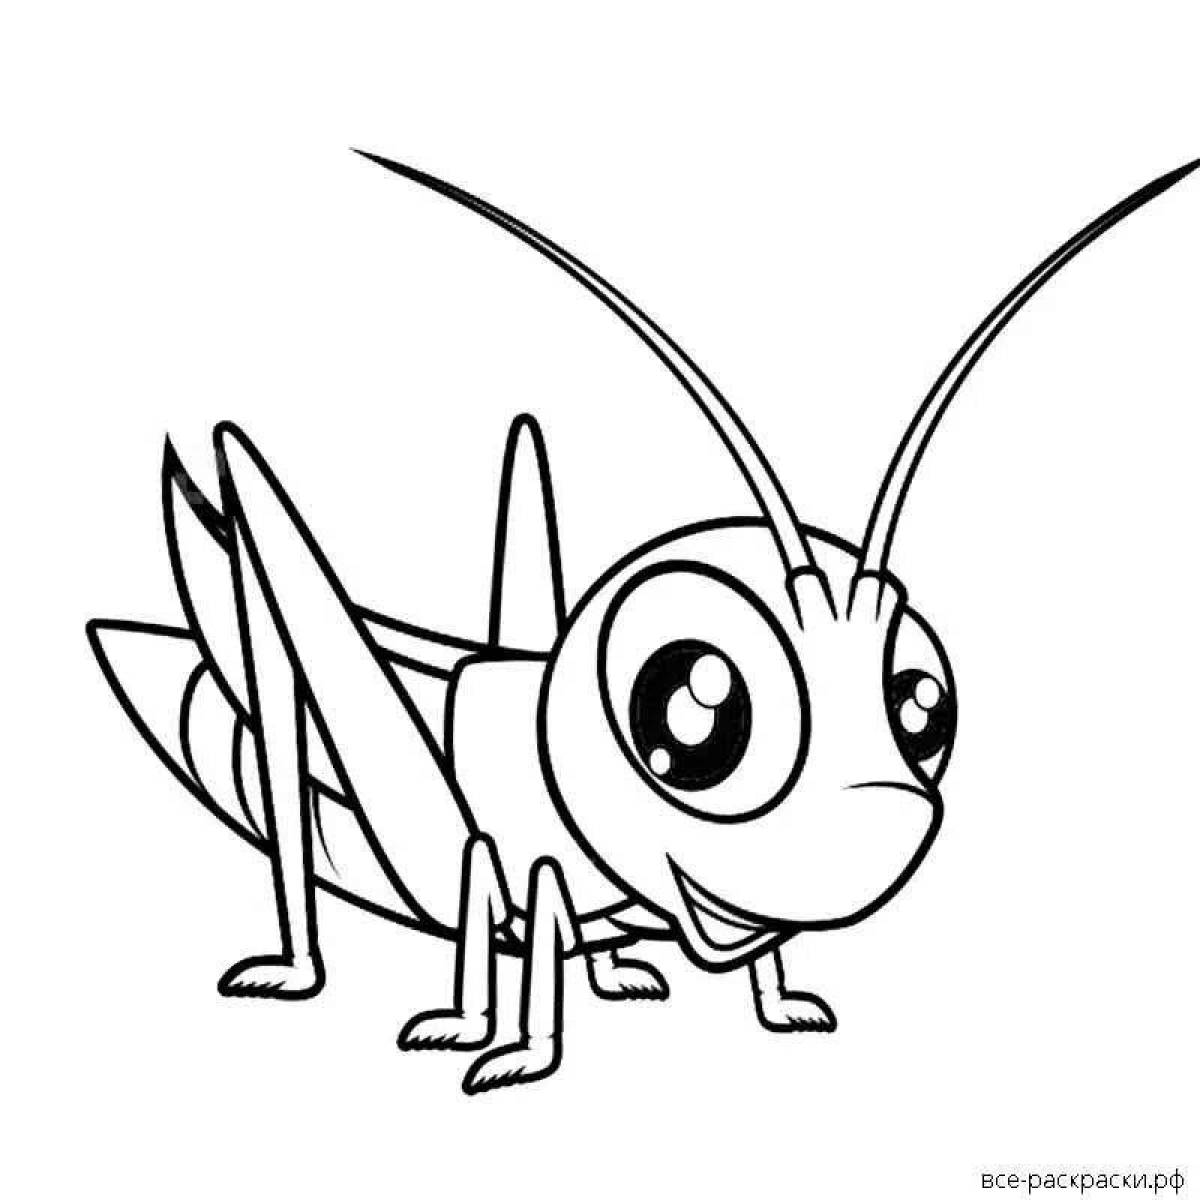 Grasshopper fun coloring book for kids